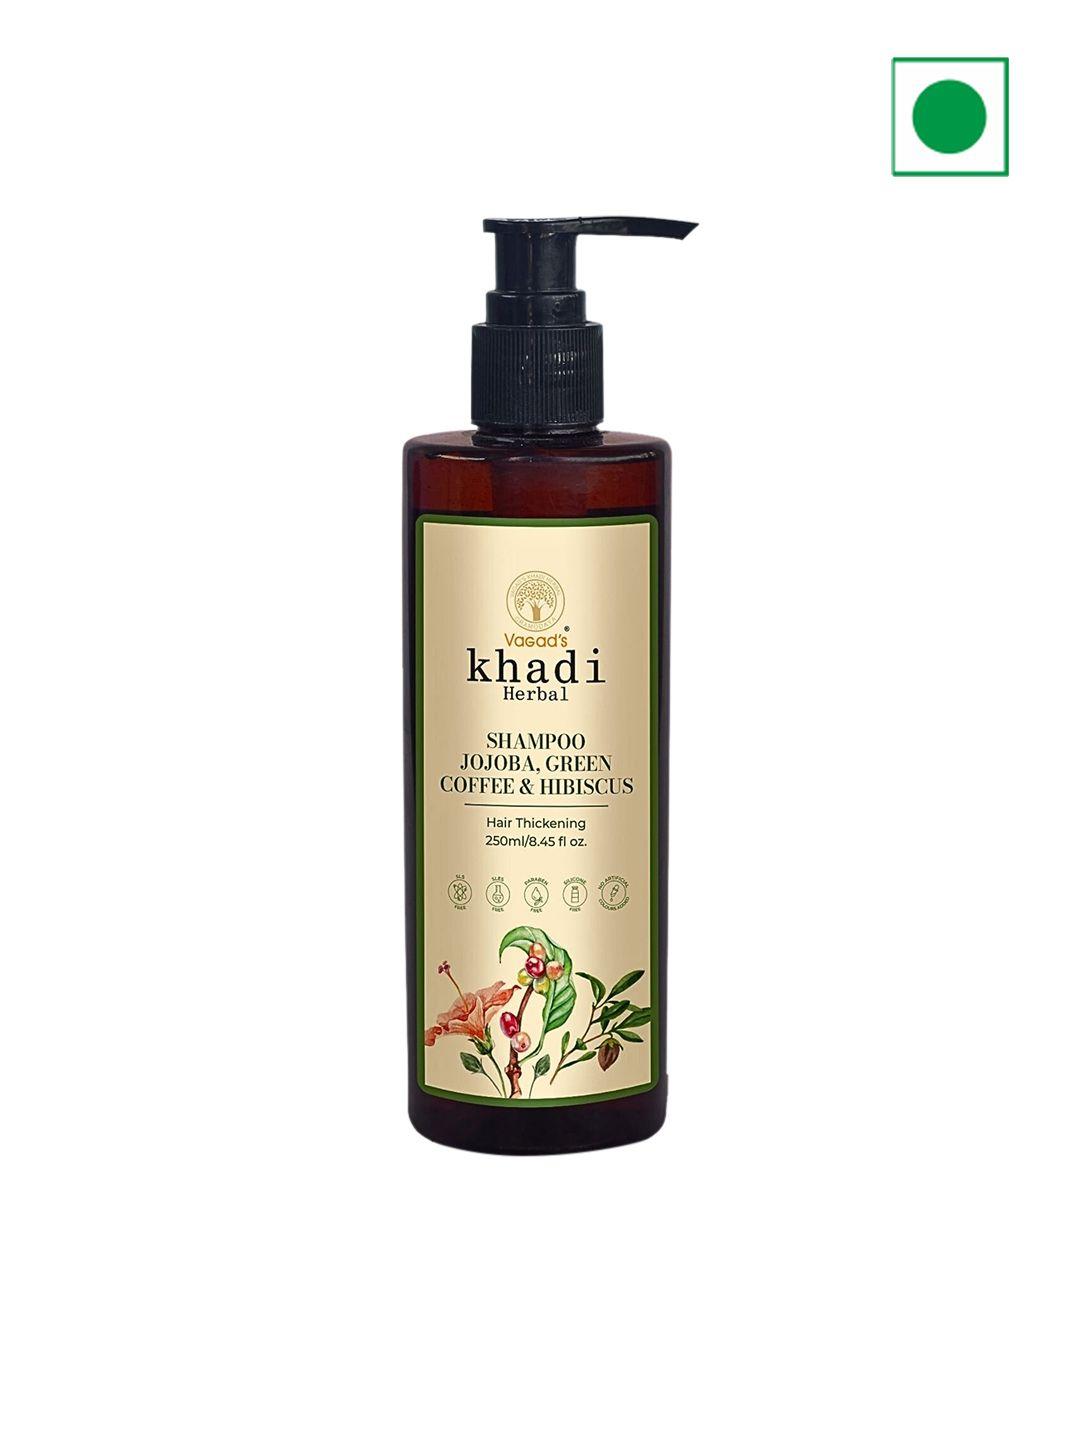 vagads-khadi-herbal-jojoba-with-green-coffee-&-hibiscus-shampoo